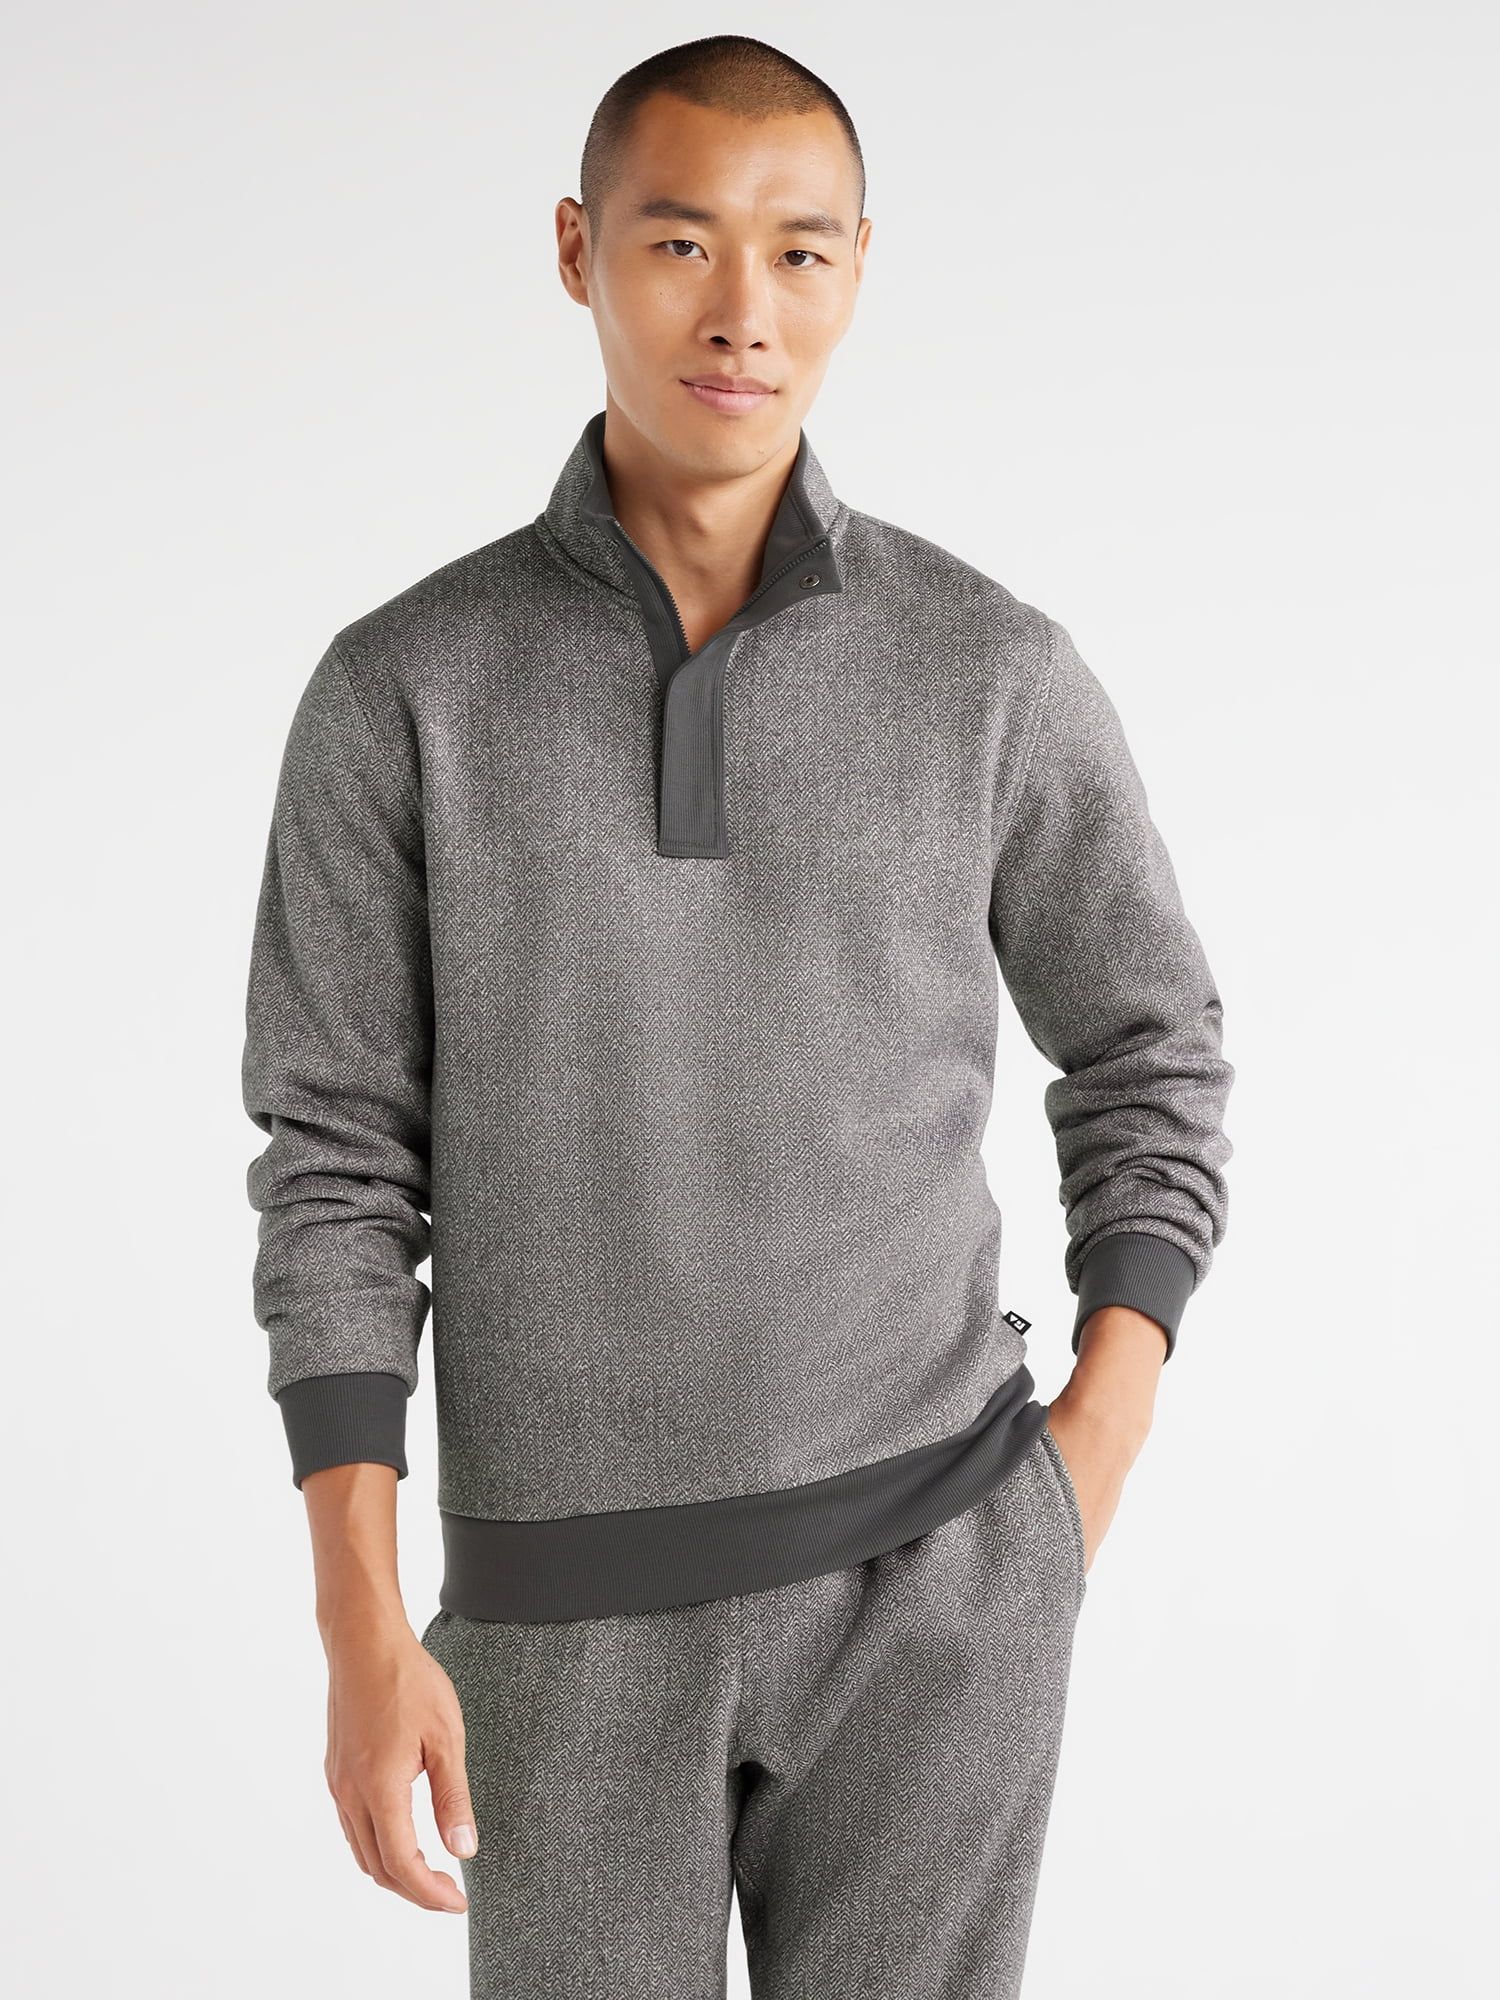 Free Assembly Men's Fleece Herringbone Mock Neck Pullover with Long Sleeves, Sizes XS-3XL | Walmart (US)